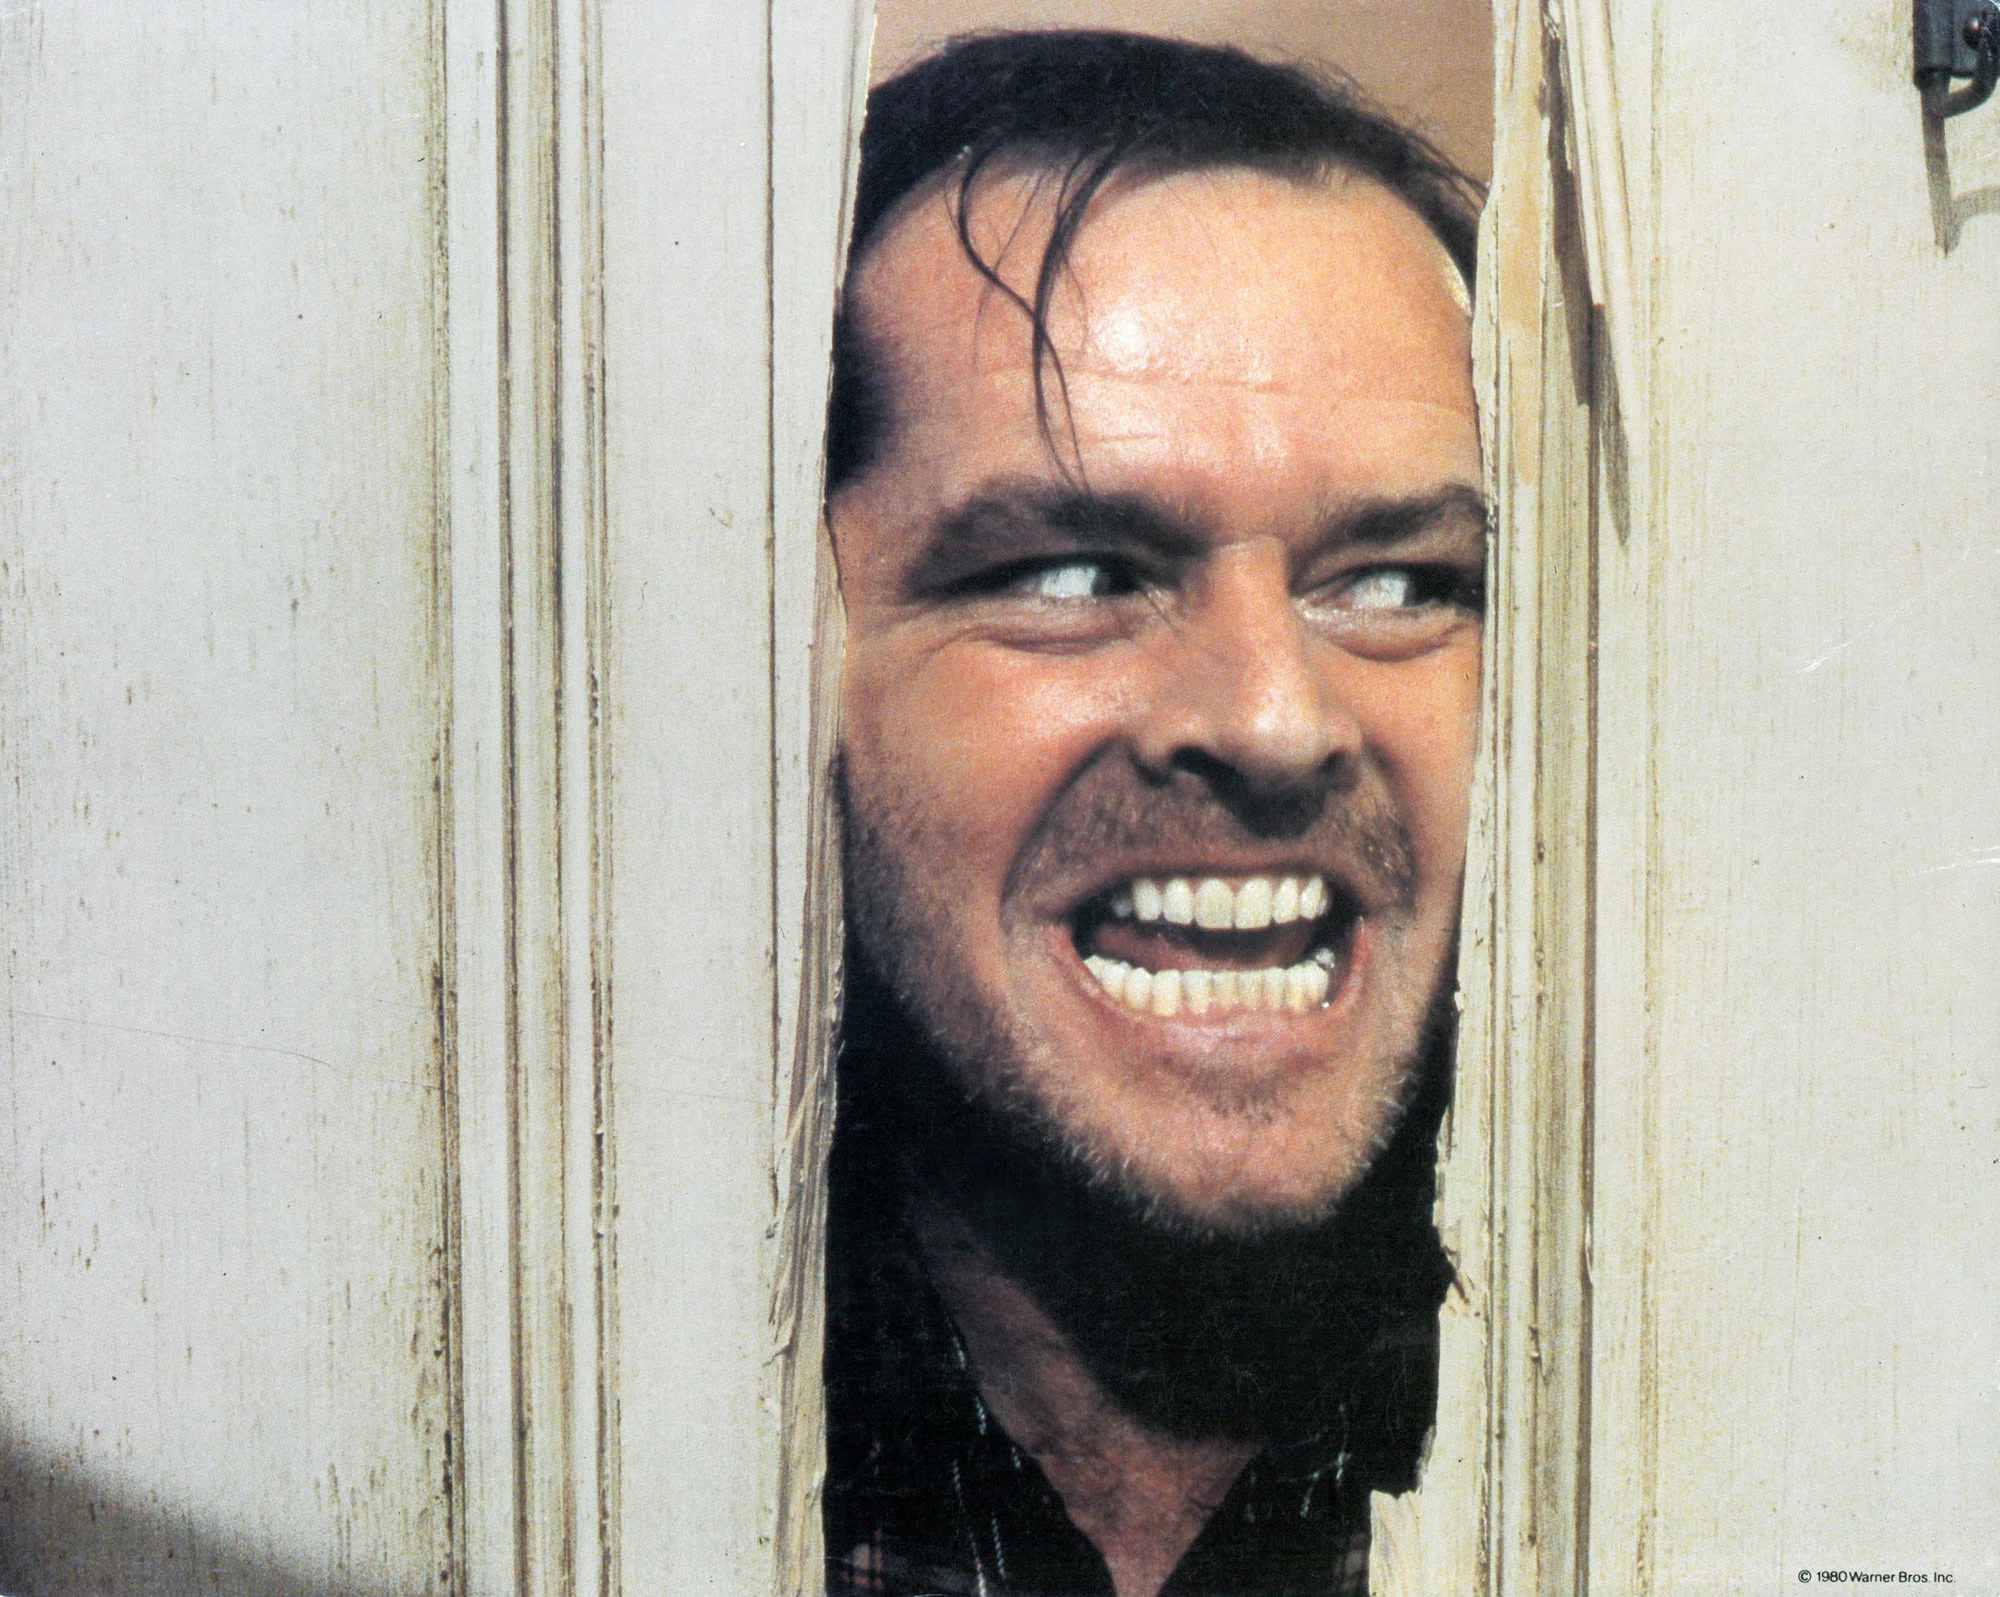 Jack Nicholson in 'The Shining' (1980)